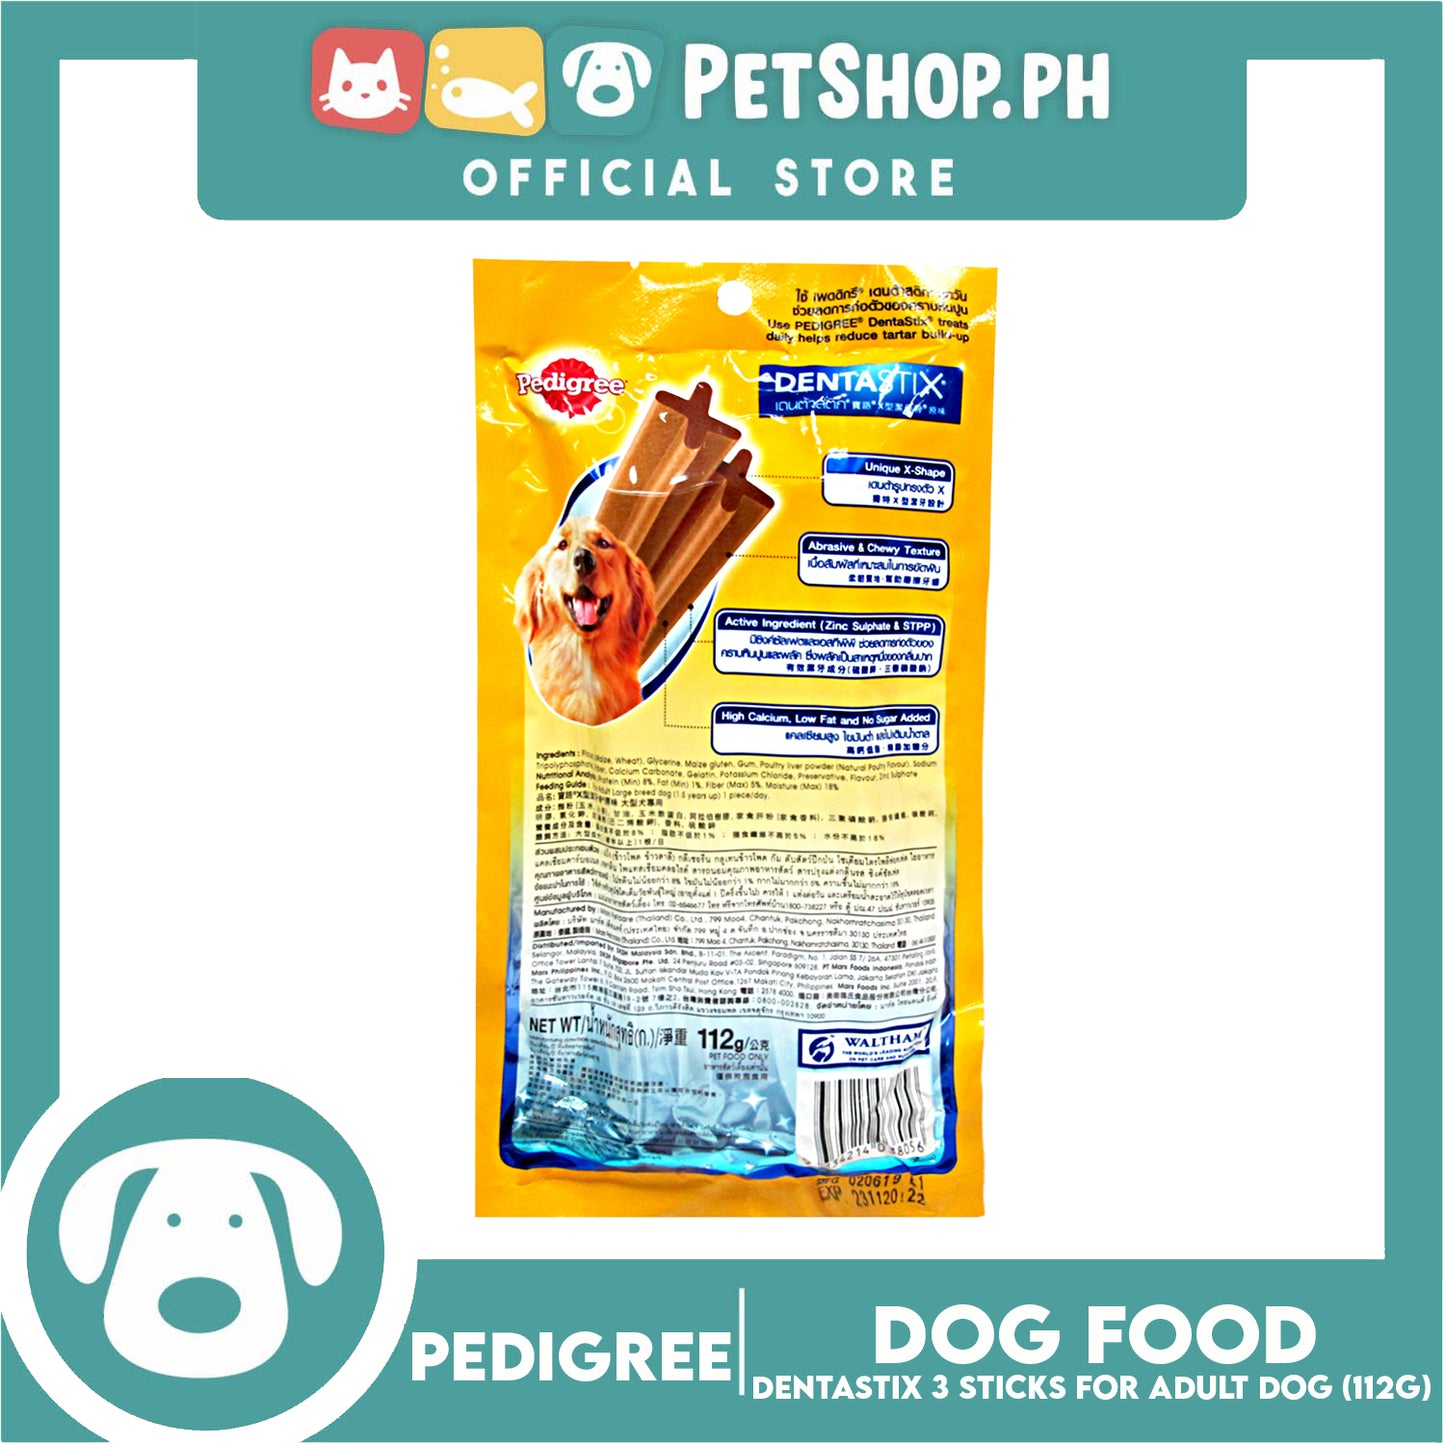 24pcs Pedigree DentaStix Large (25-50kg) 112g (3 Sticks) Dog Dental Treats